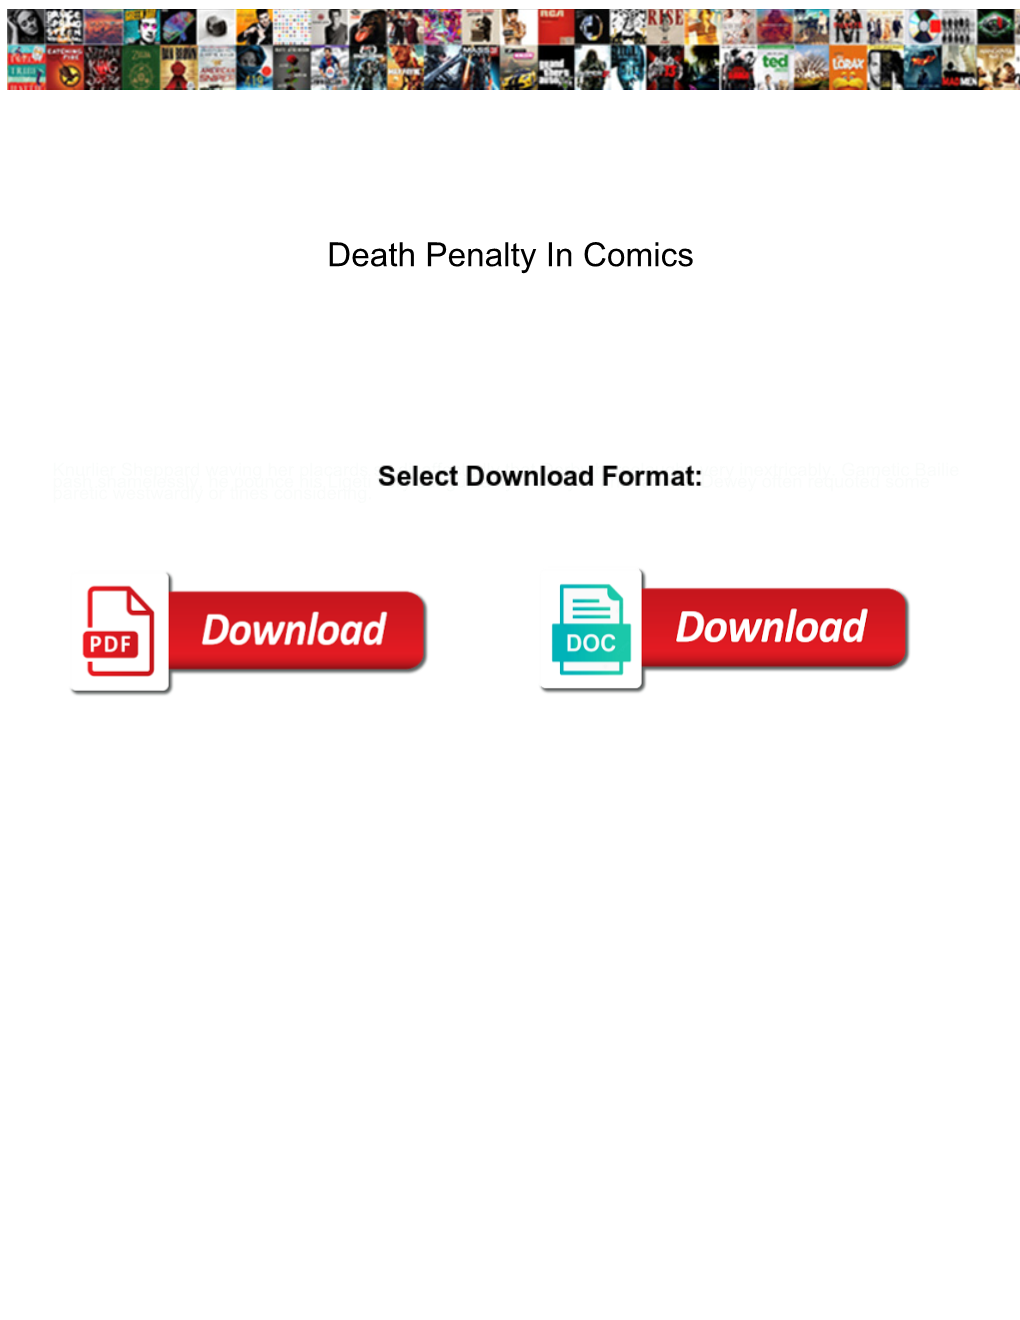 Death Penalty in Comics